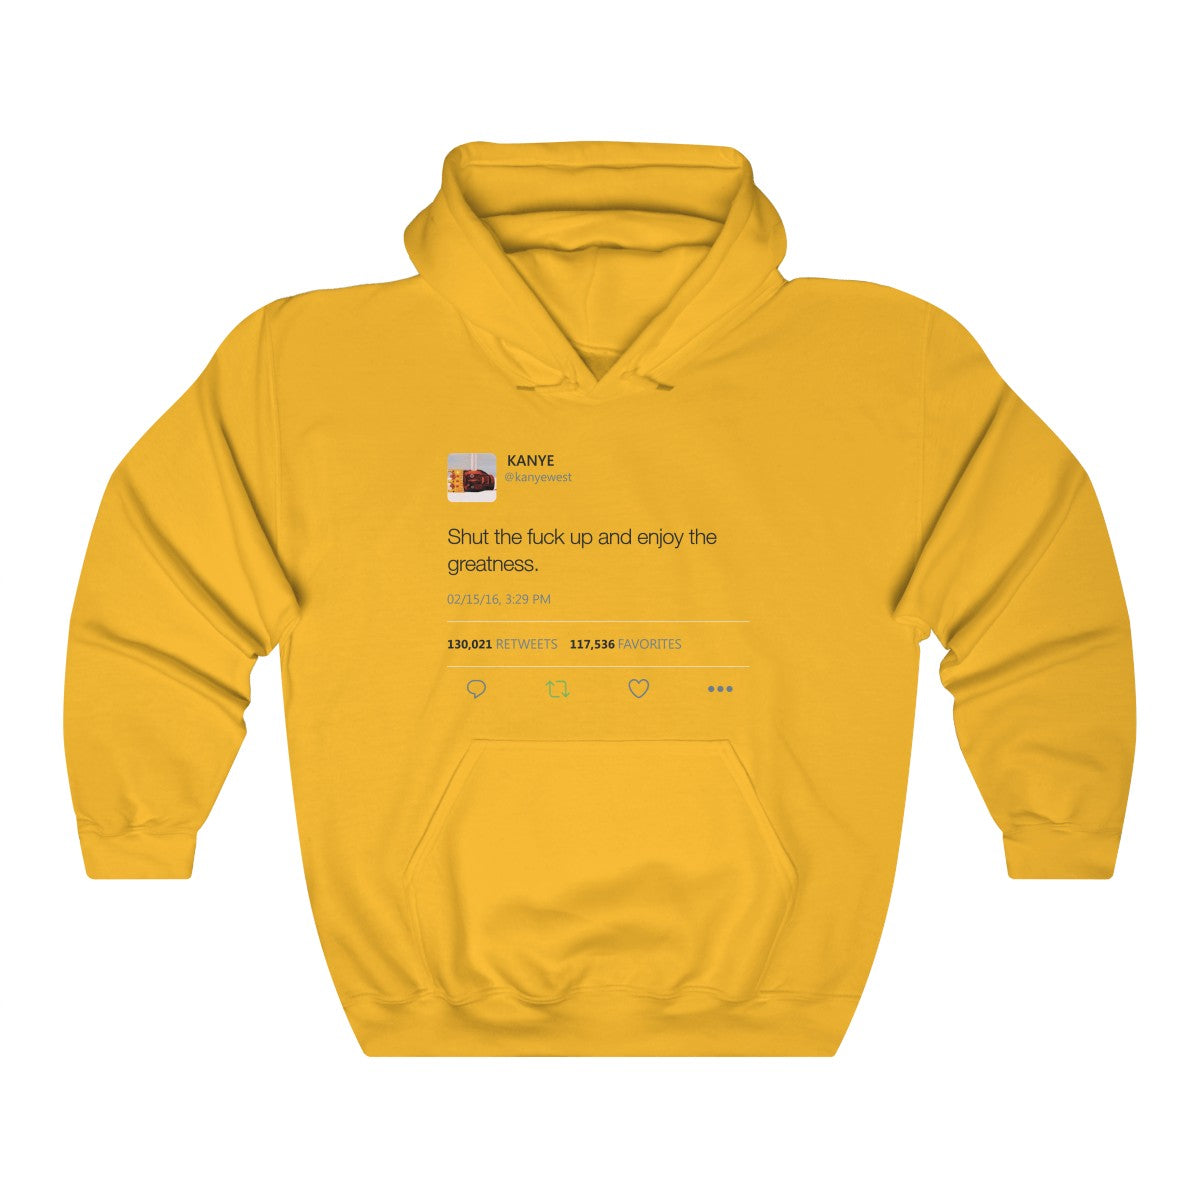 Shut the fuck up and enjoy the greatness - Kanye West Tweet Inspired Unisex Hooded Sweatshirt Hoodie-Gold-S-Archethype